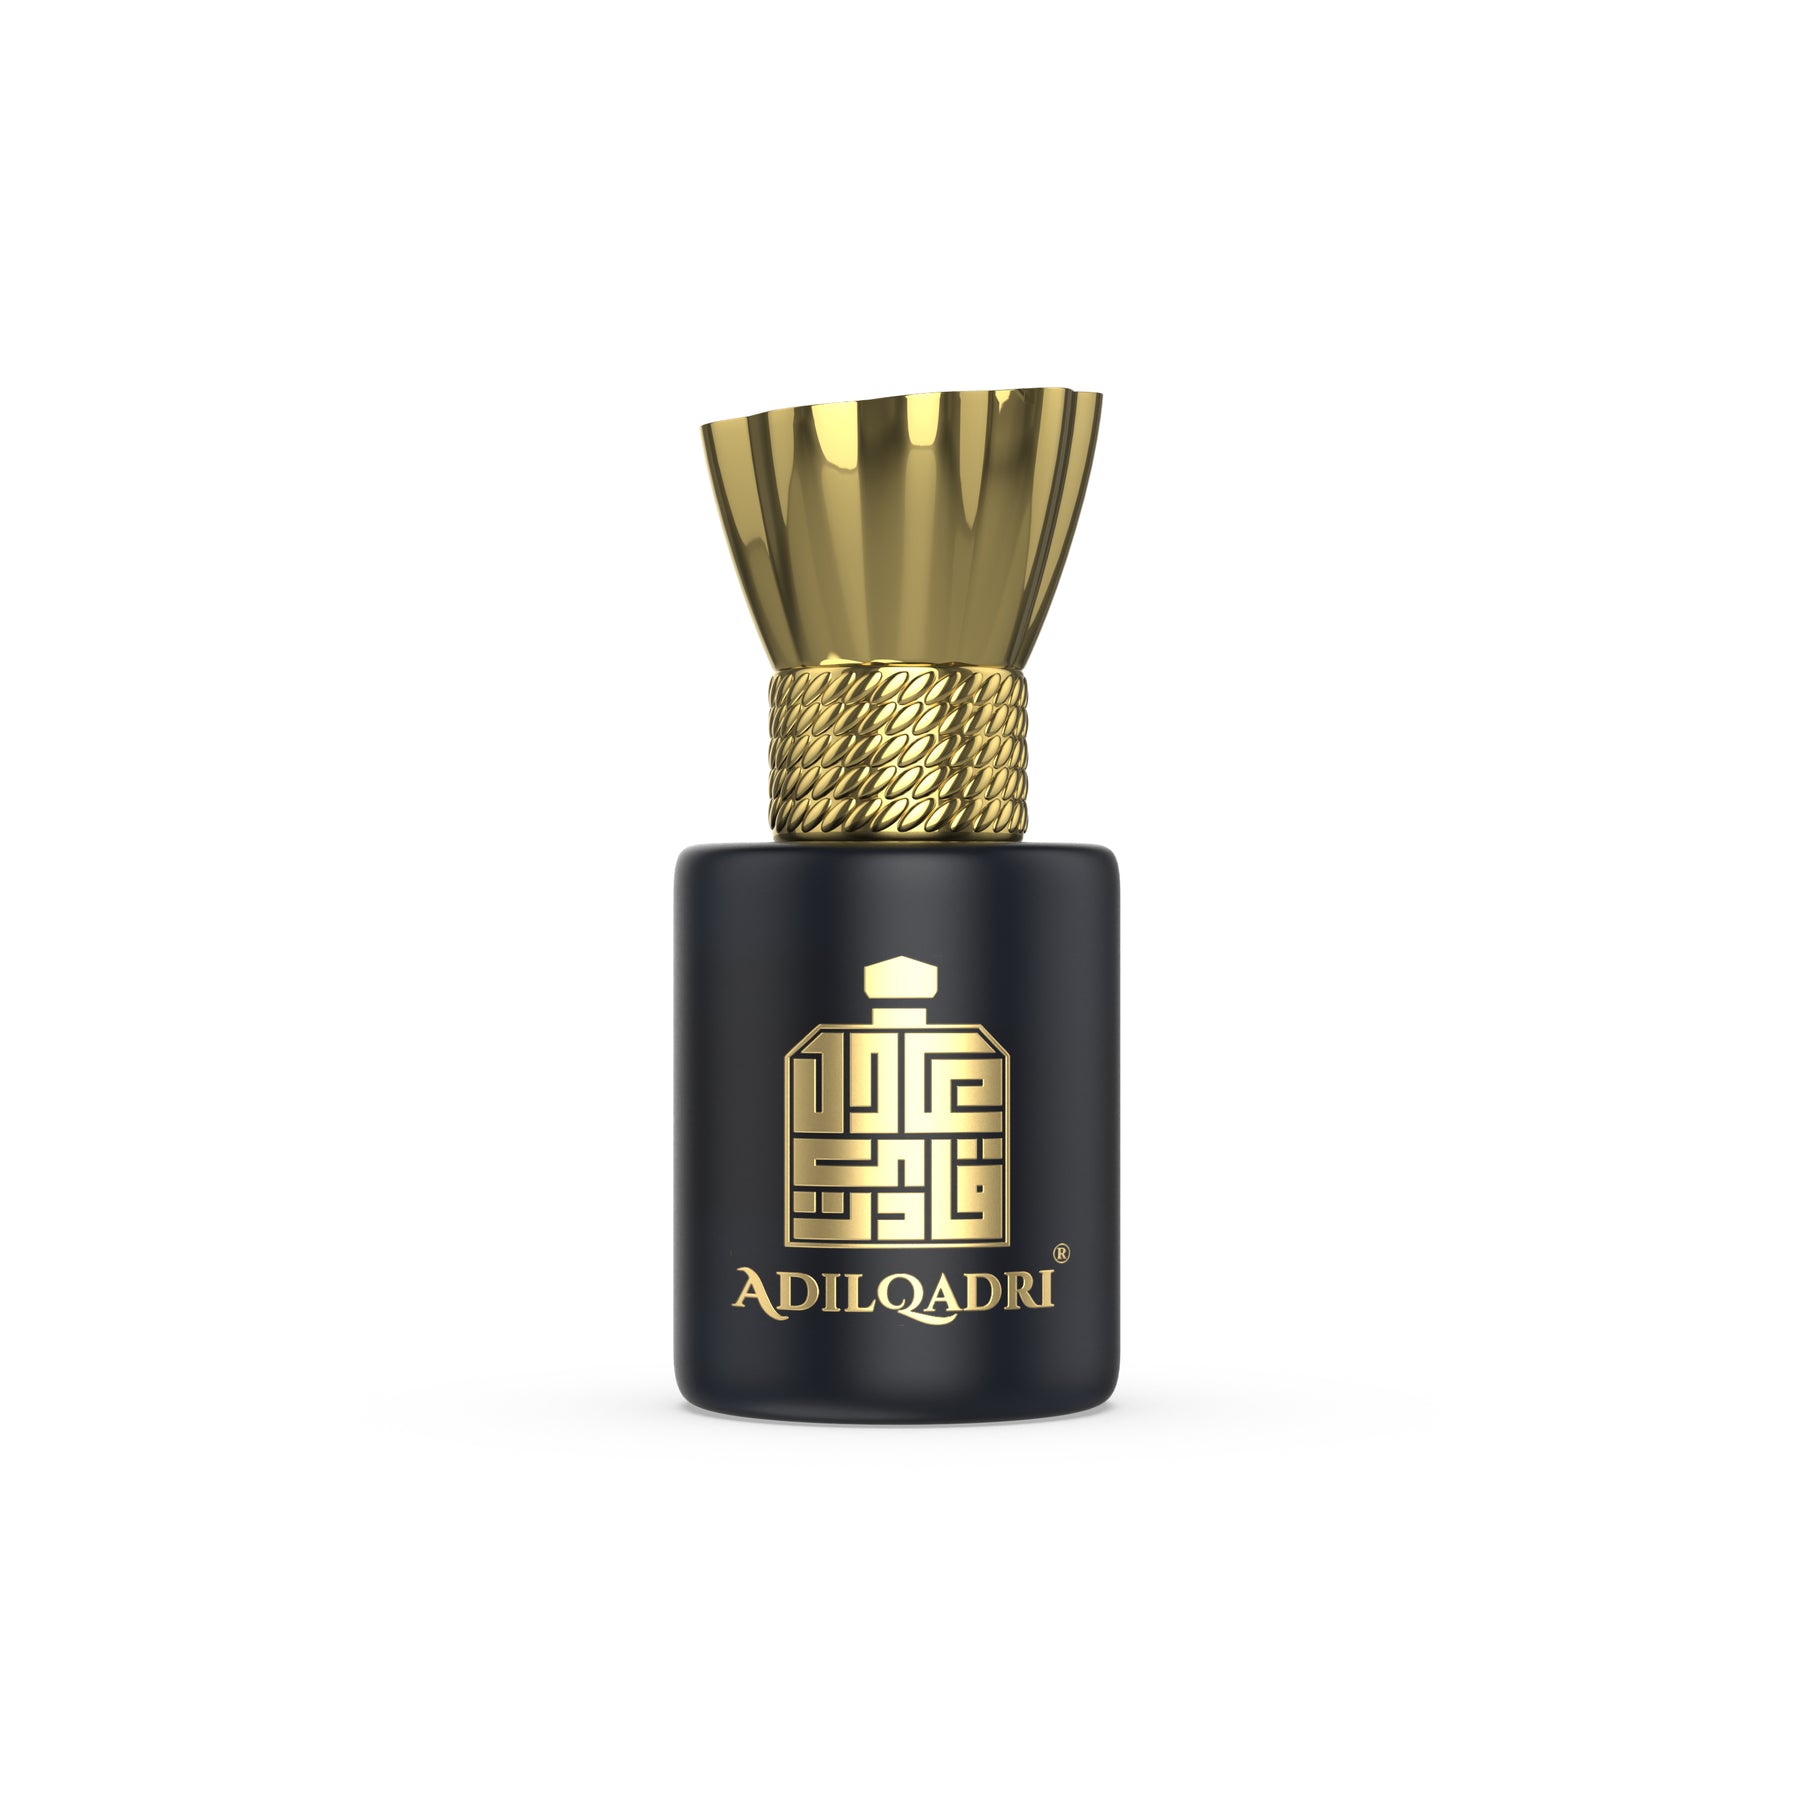 Golden Dust Premium Quality Attar Perfume 12 ML (French Perfume)